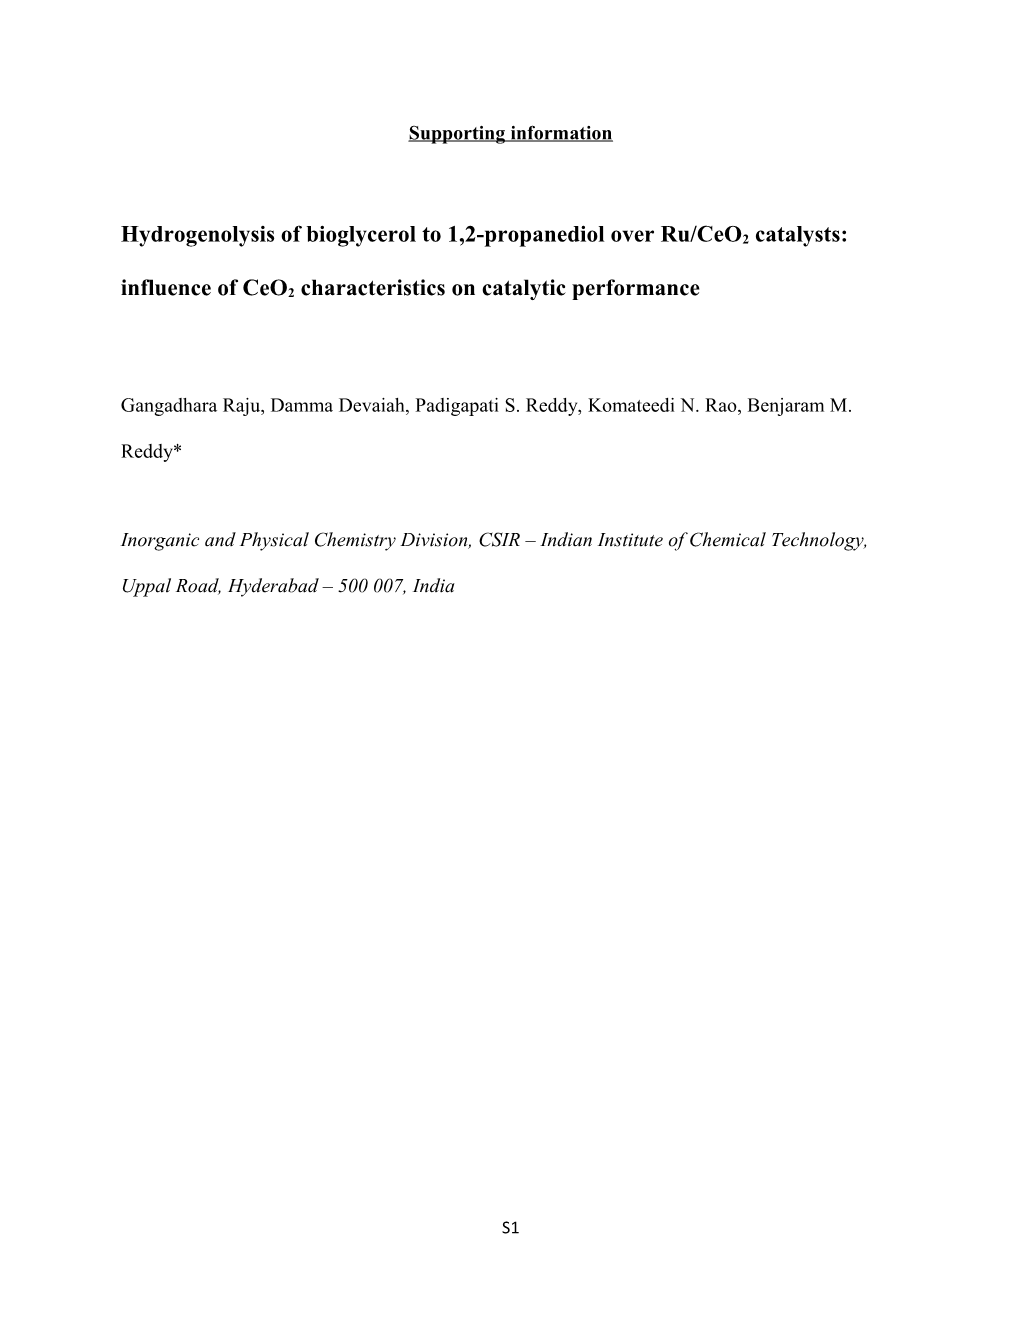 Hydrogenolysis of Bioglycerol to 1,2-Propanediol Over Ru/Ceo2catalysts: Influence Of